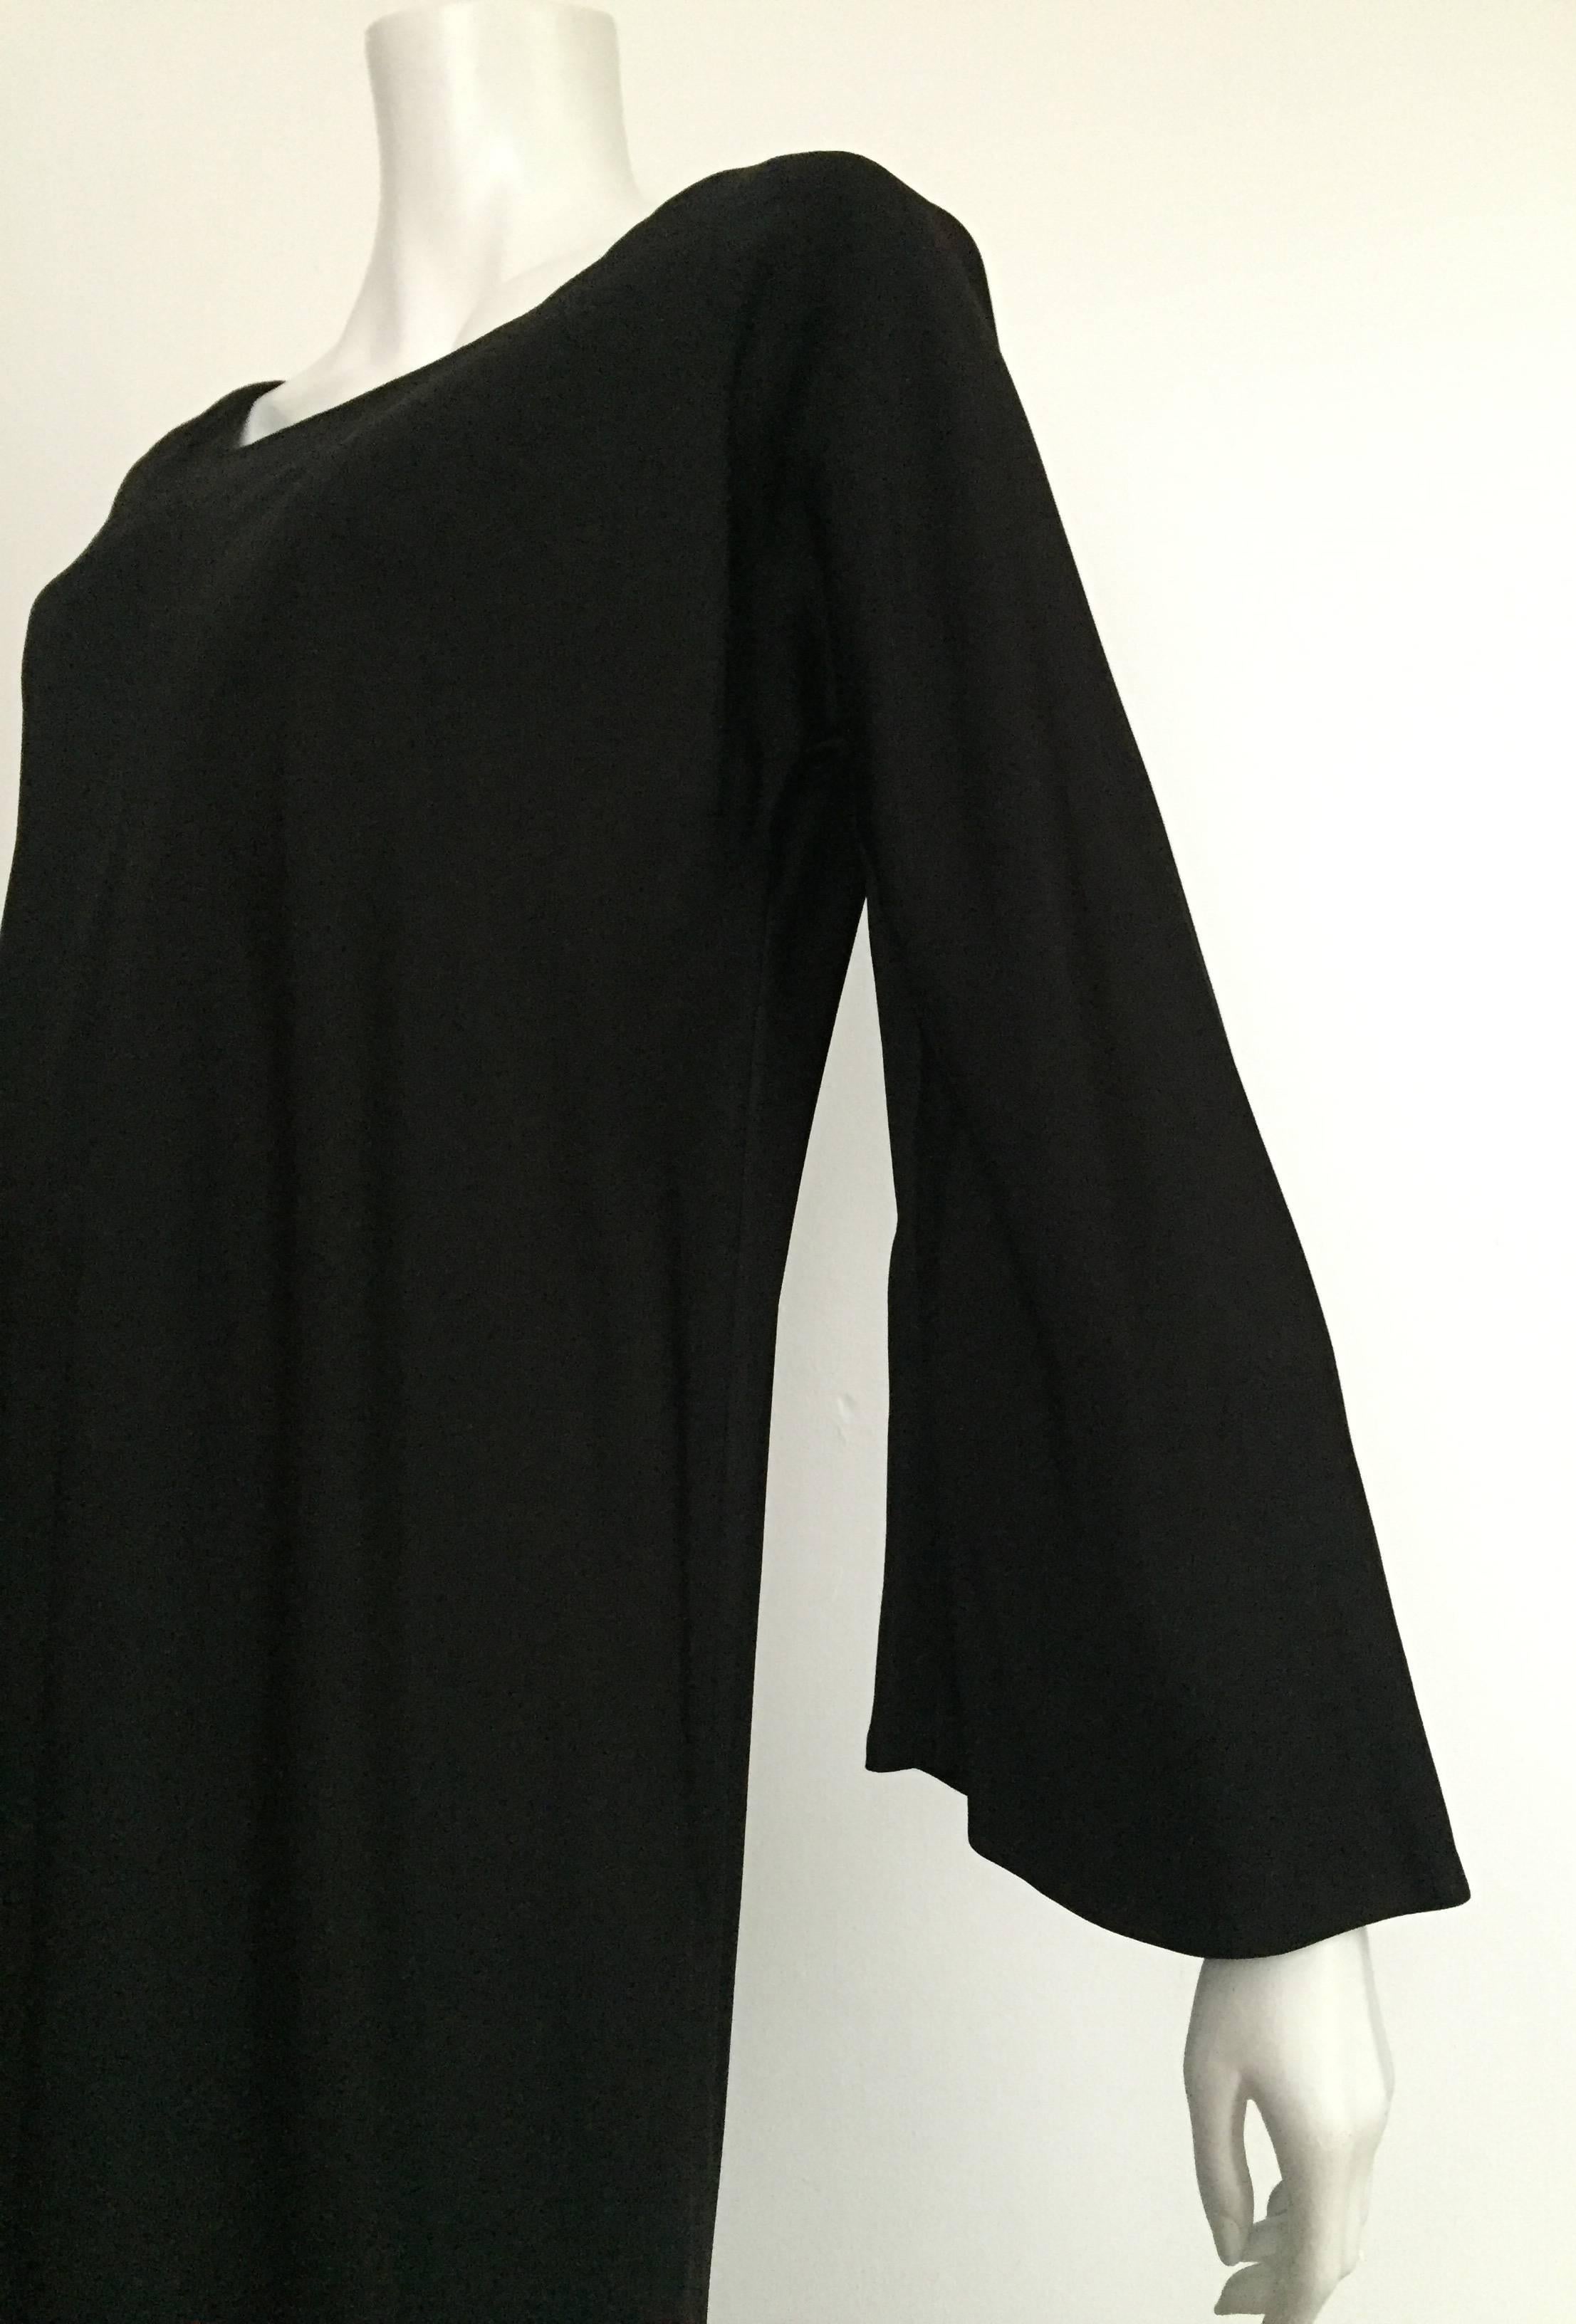 Black Pauline Trigere 80s black evening dress size 12 / 14. For Sale